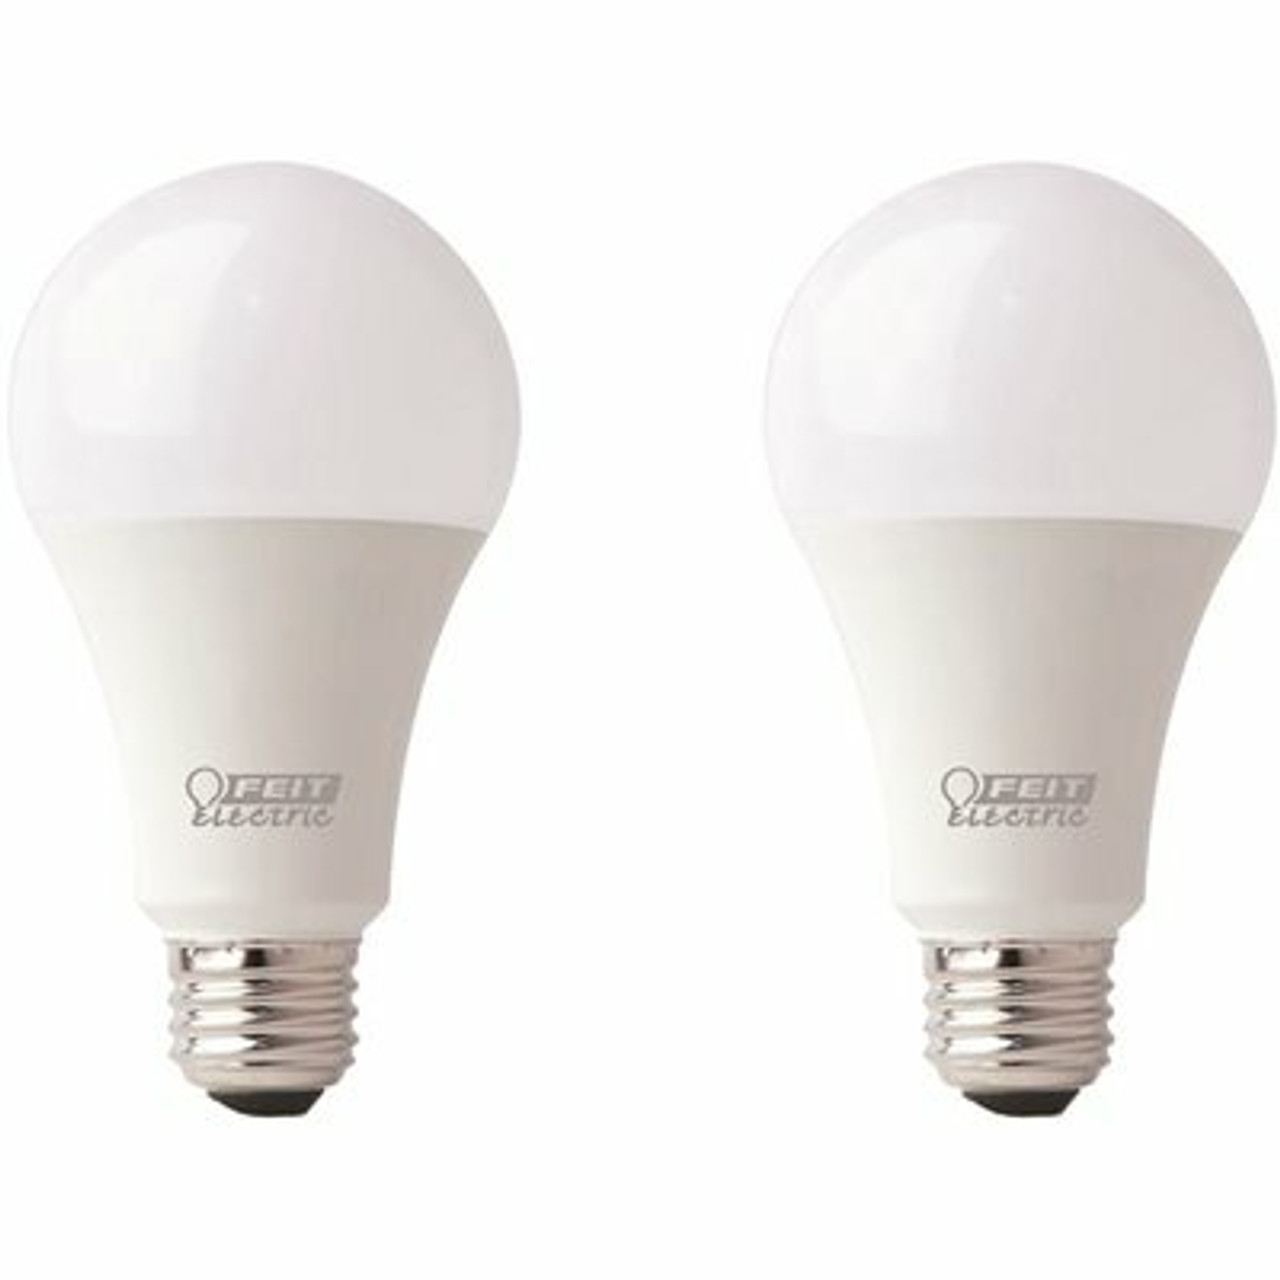 Feit Electric 100-Watt Equivalent Daylight (5000K) A19 Cec Title 24 Compliant Led Light Bulb (2-Pack)